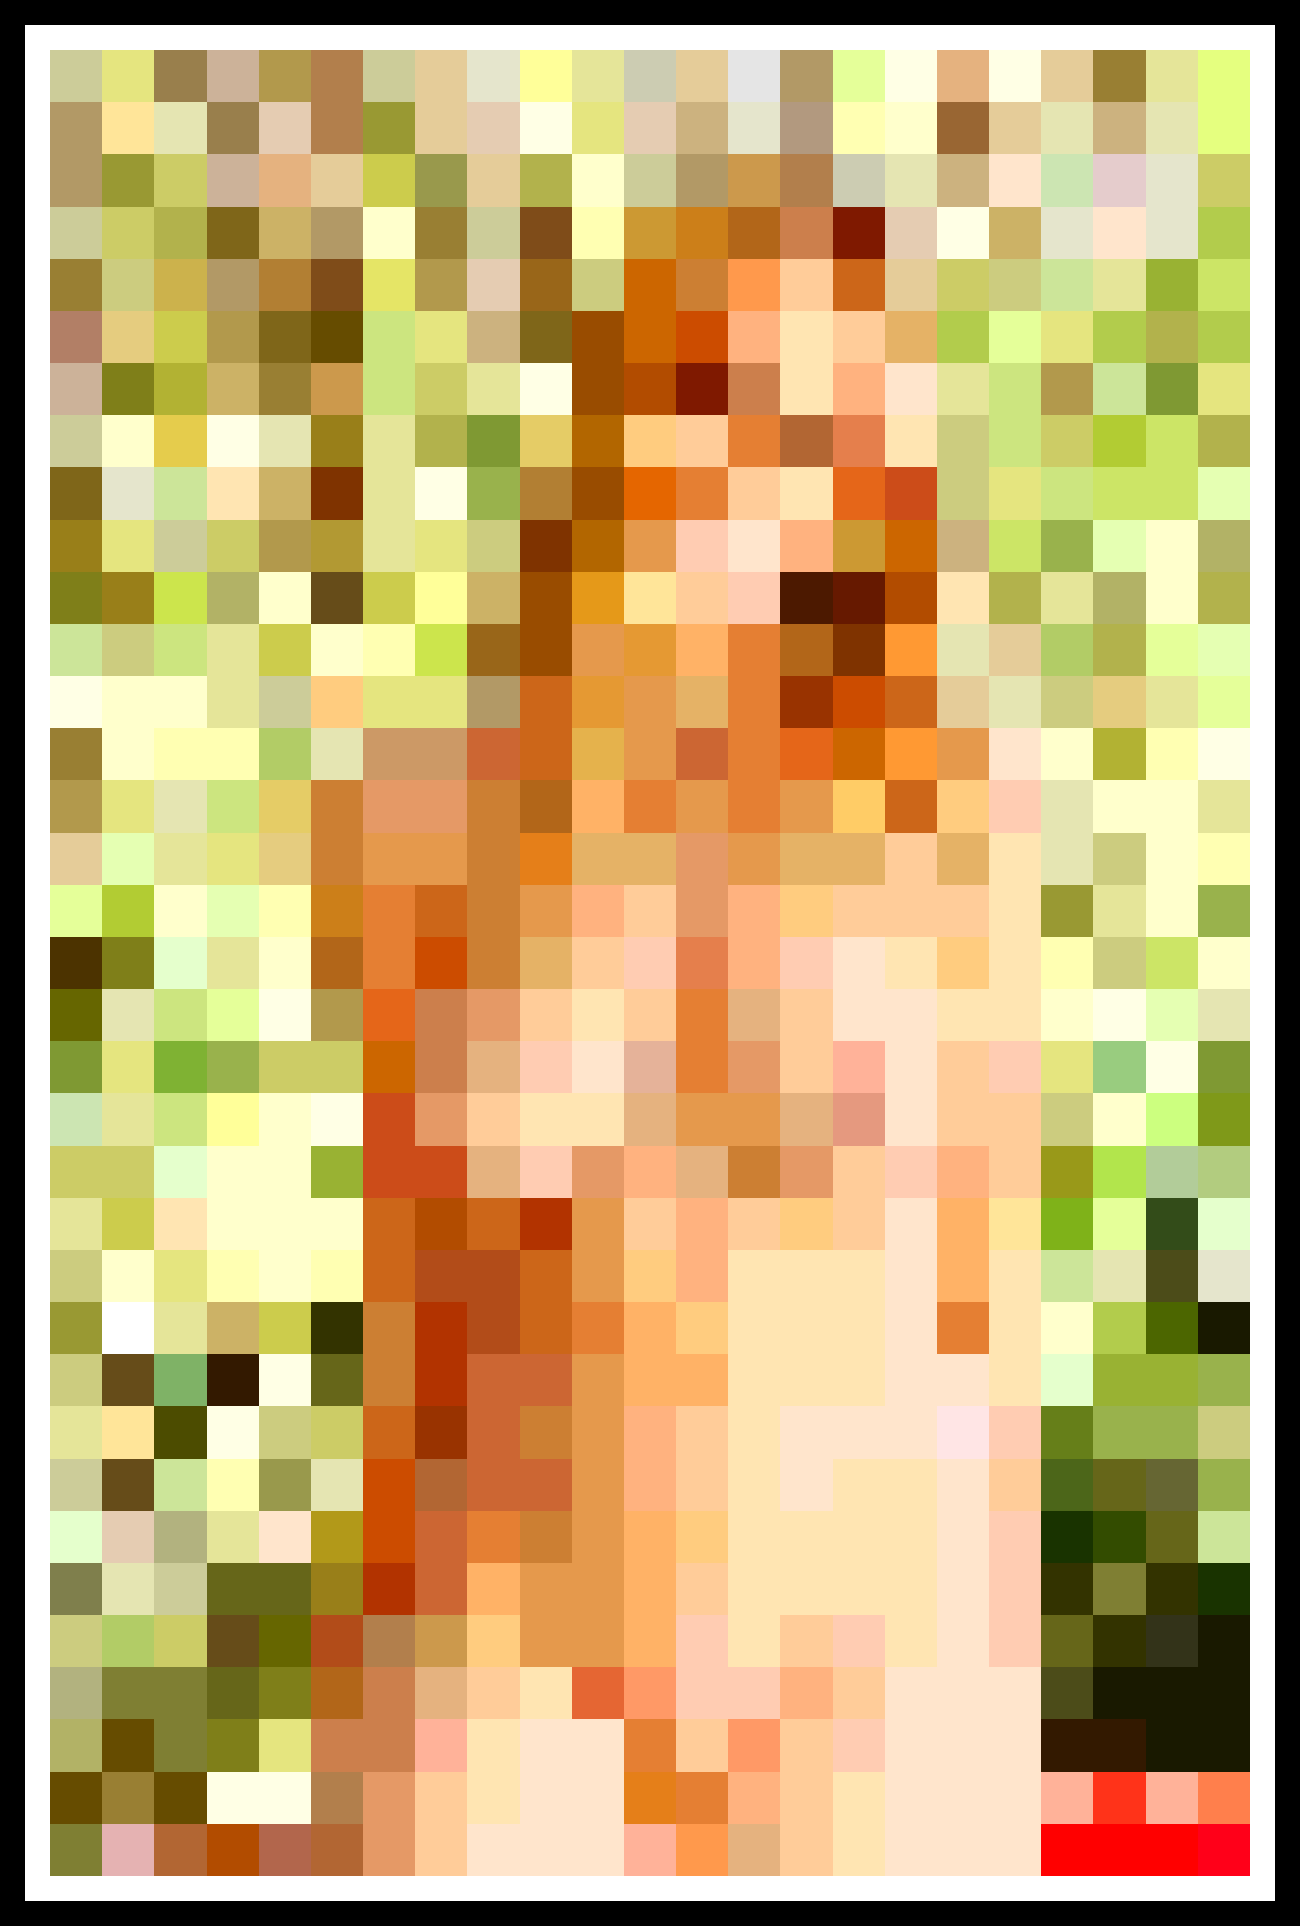 Rom Vivid Anal Sex Techniques - Nude Pinup Model Pixel Art 202 - NUDEZ | OpenSea